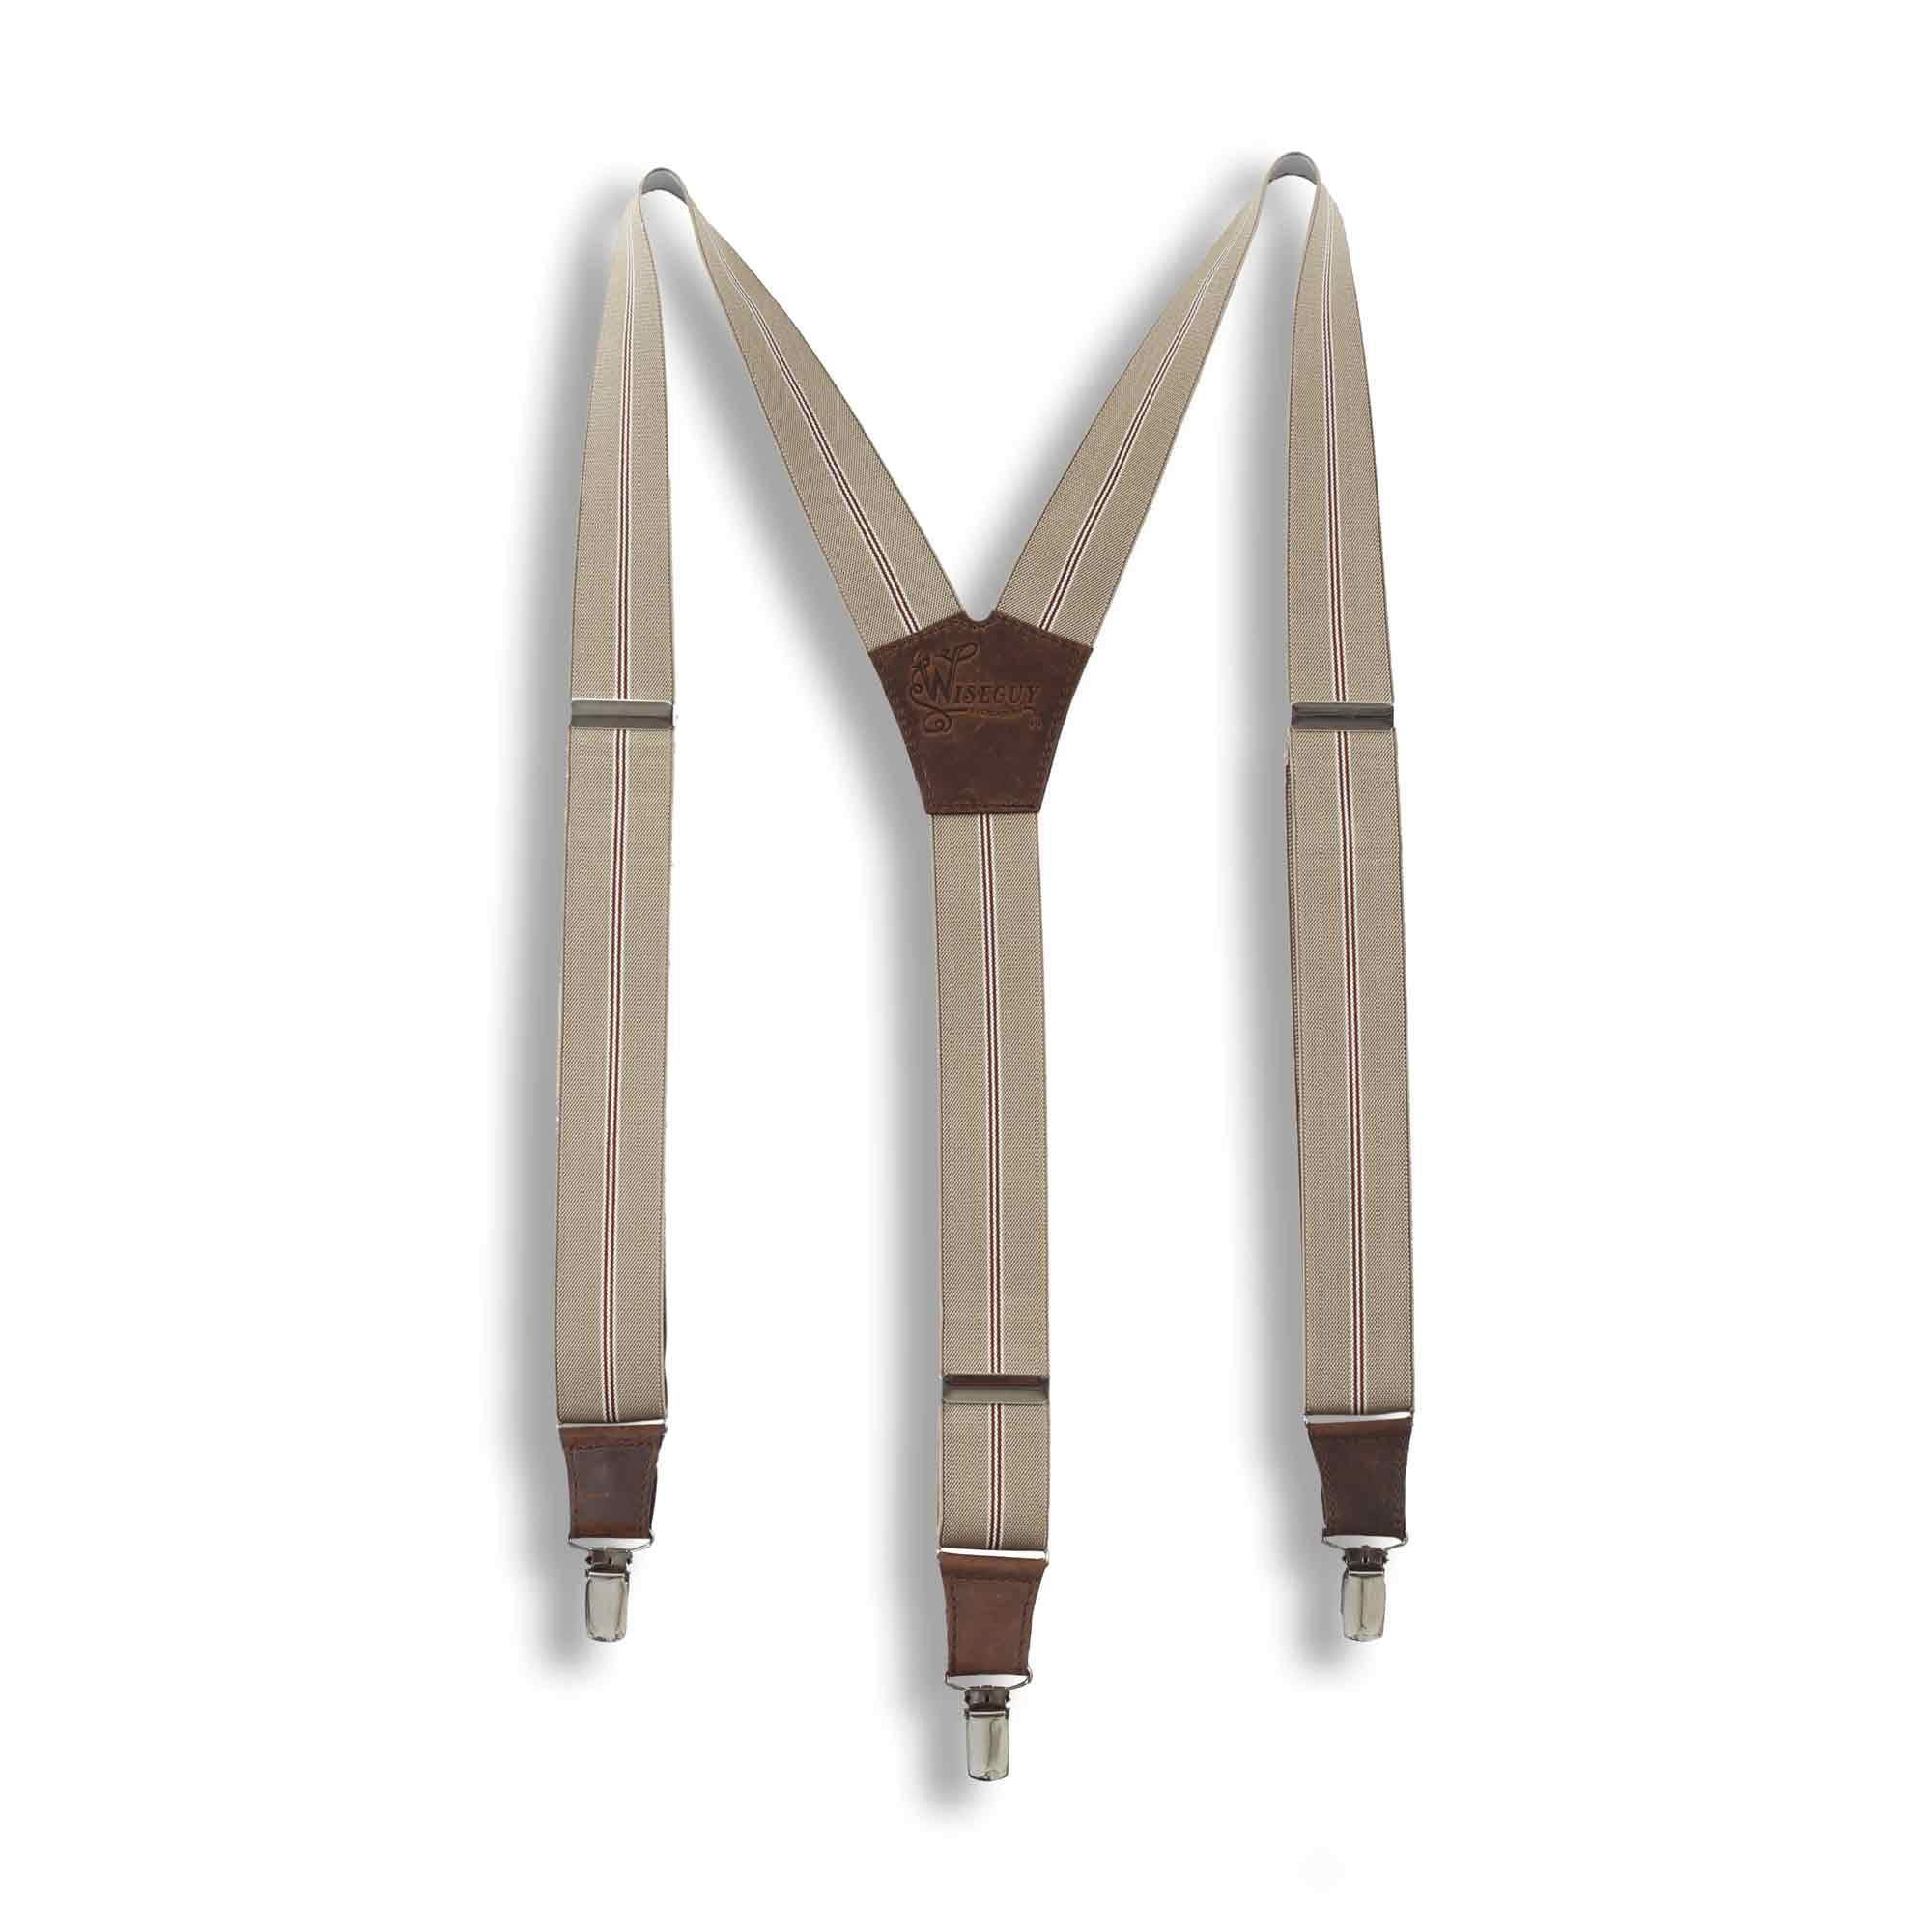 The Barber Dress Suspenders 1.3 inch wide with adjustable straps - Wiseguy Suspenders